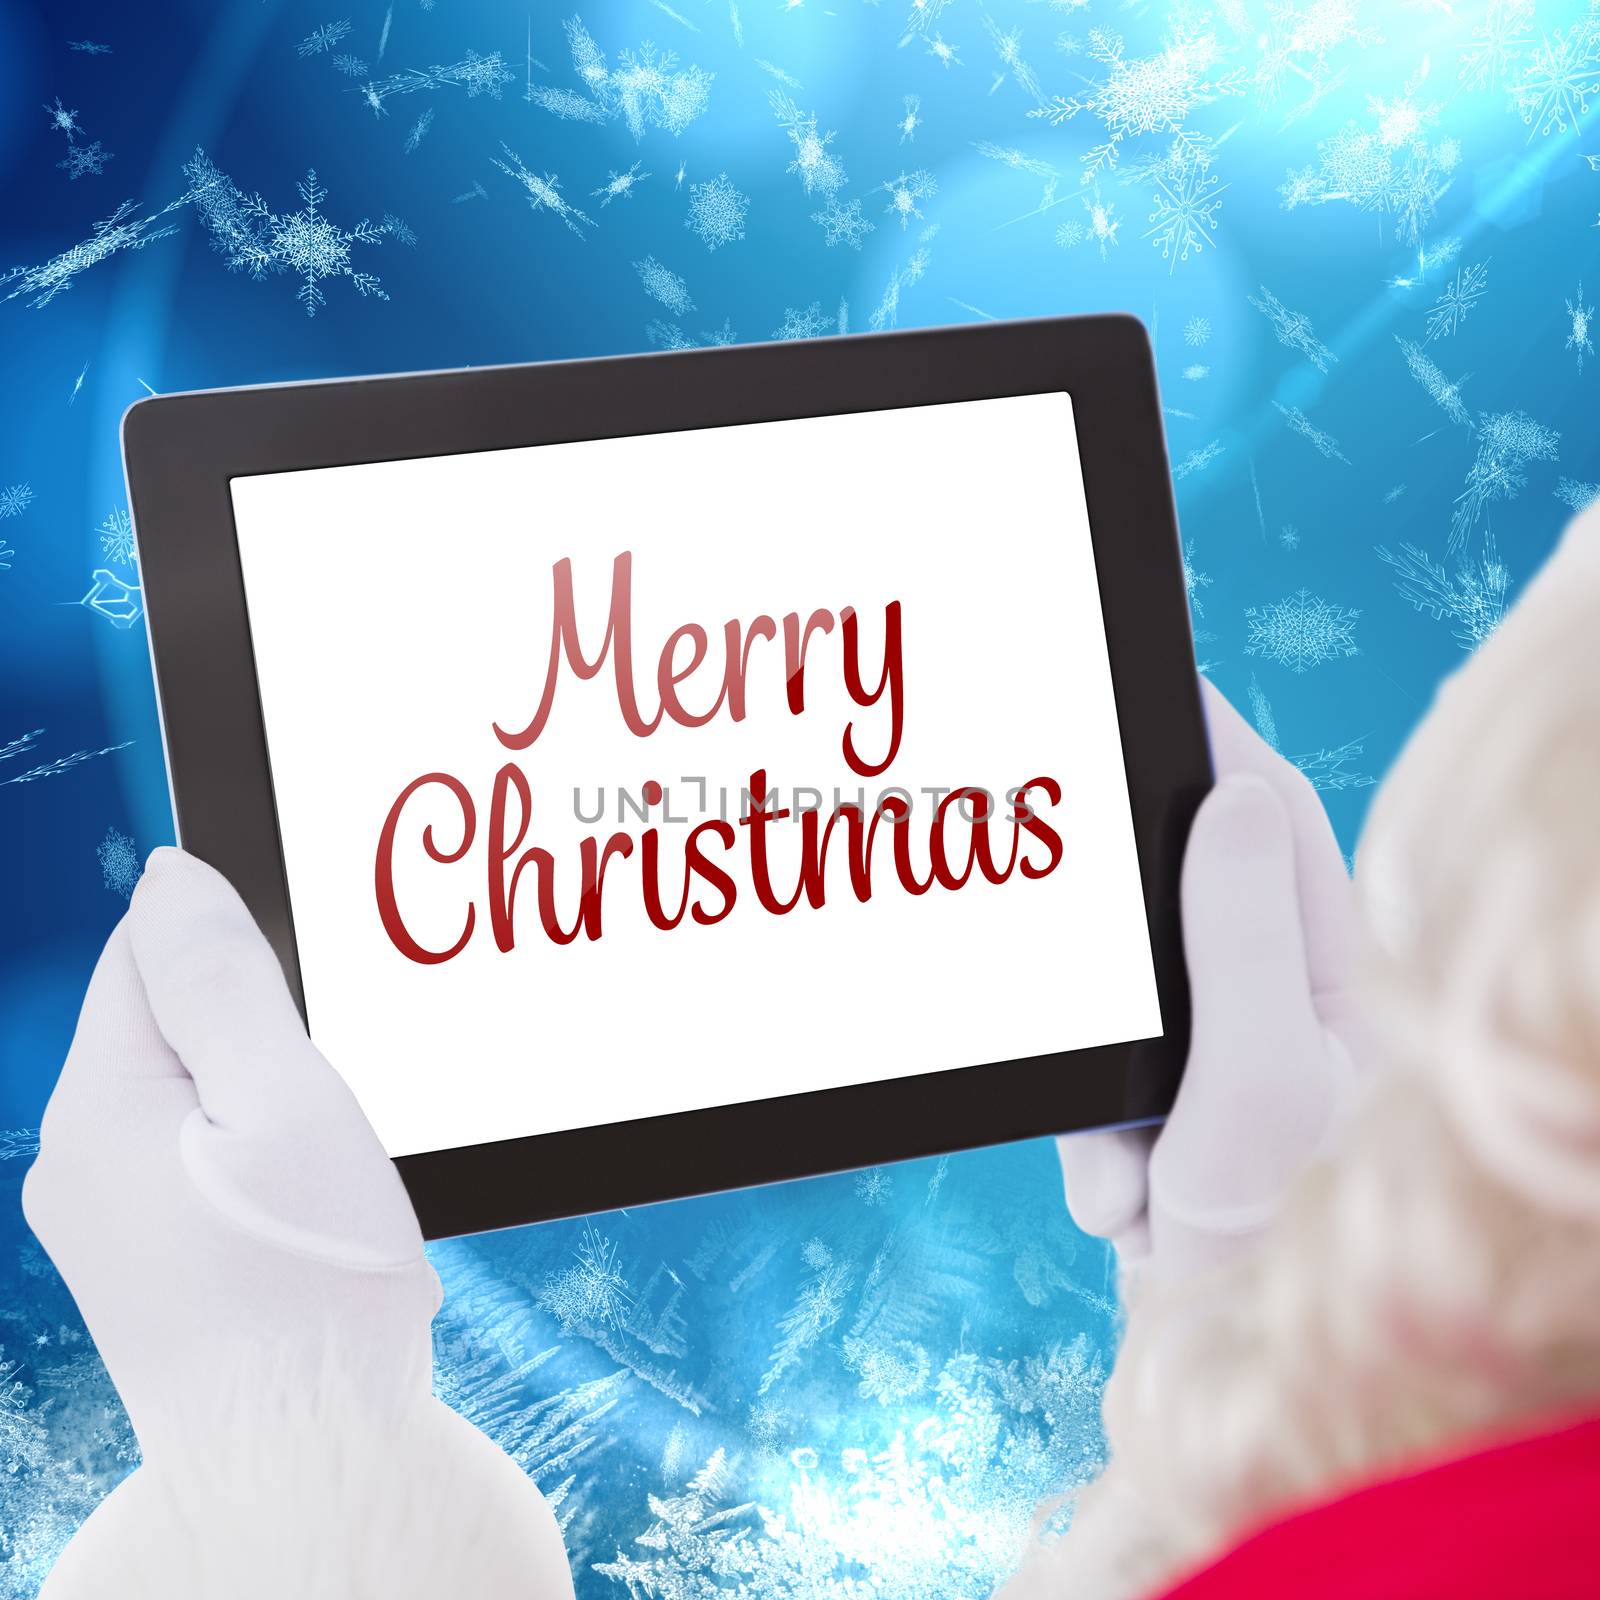 Santa claus using tablet pc against blue snow flake pattern design